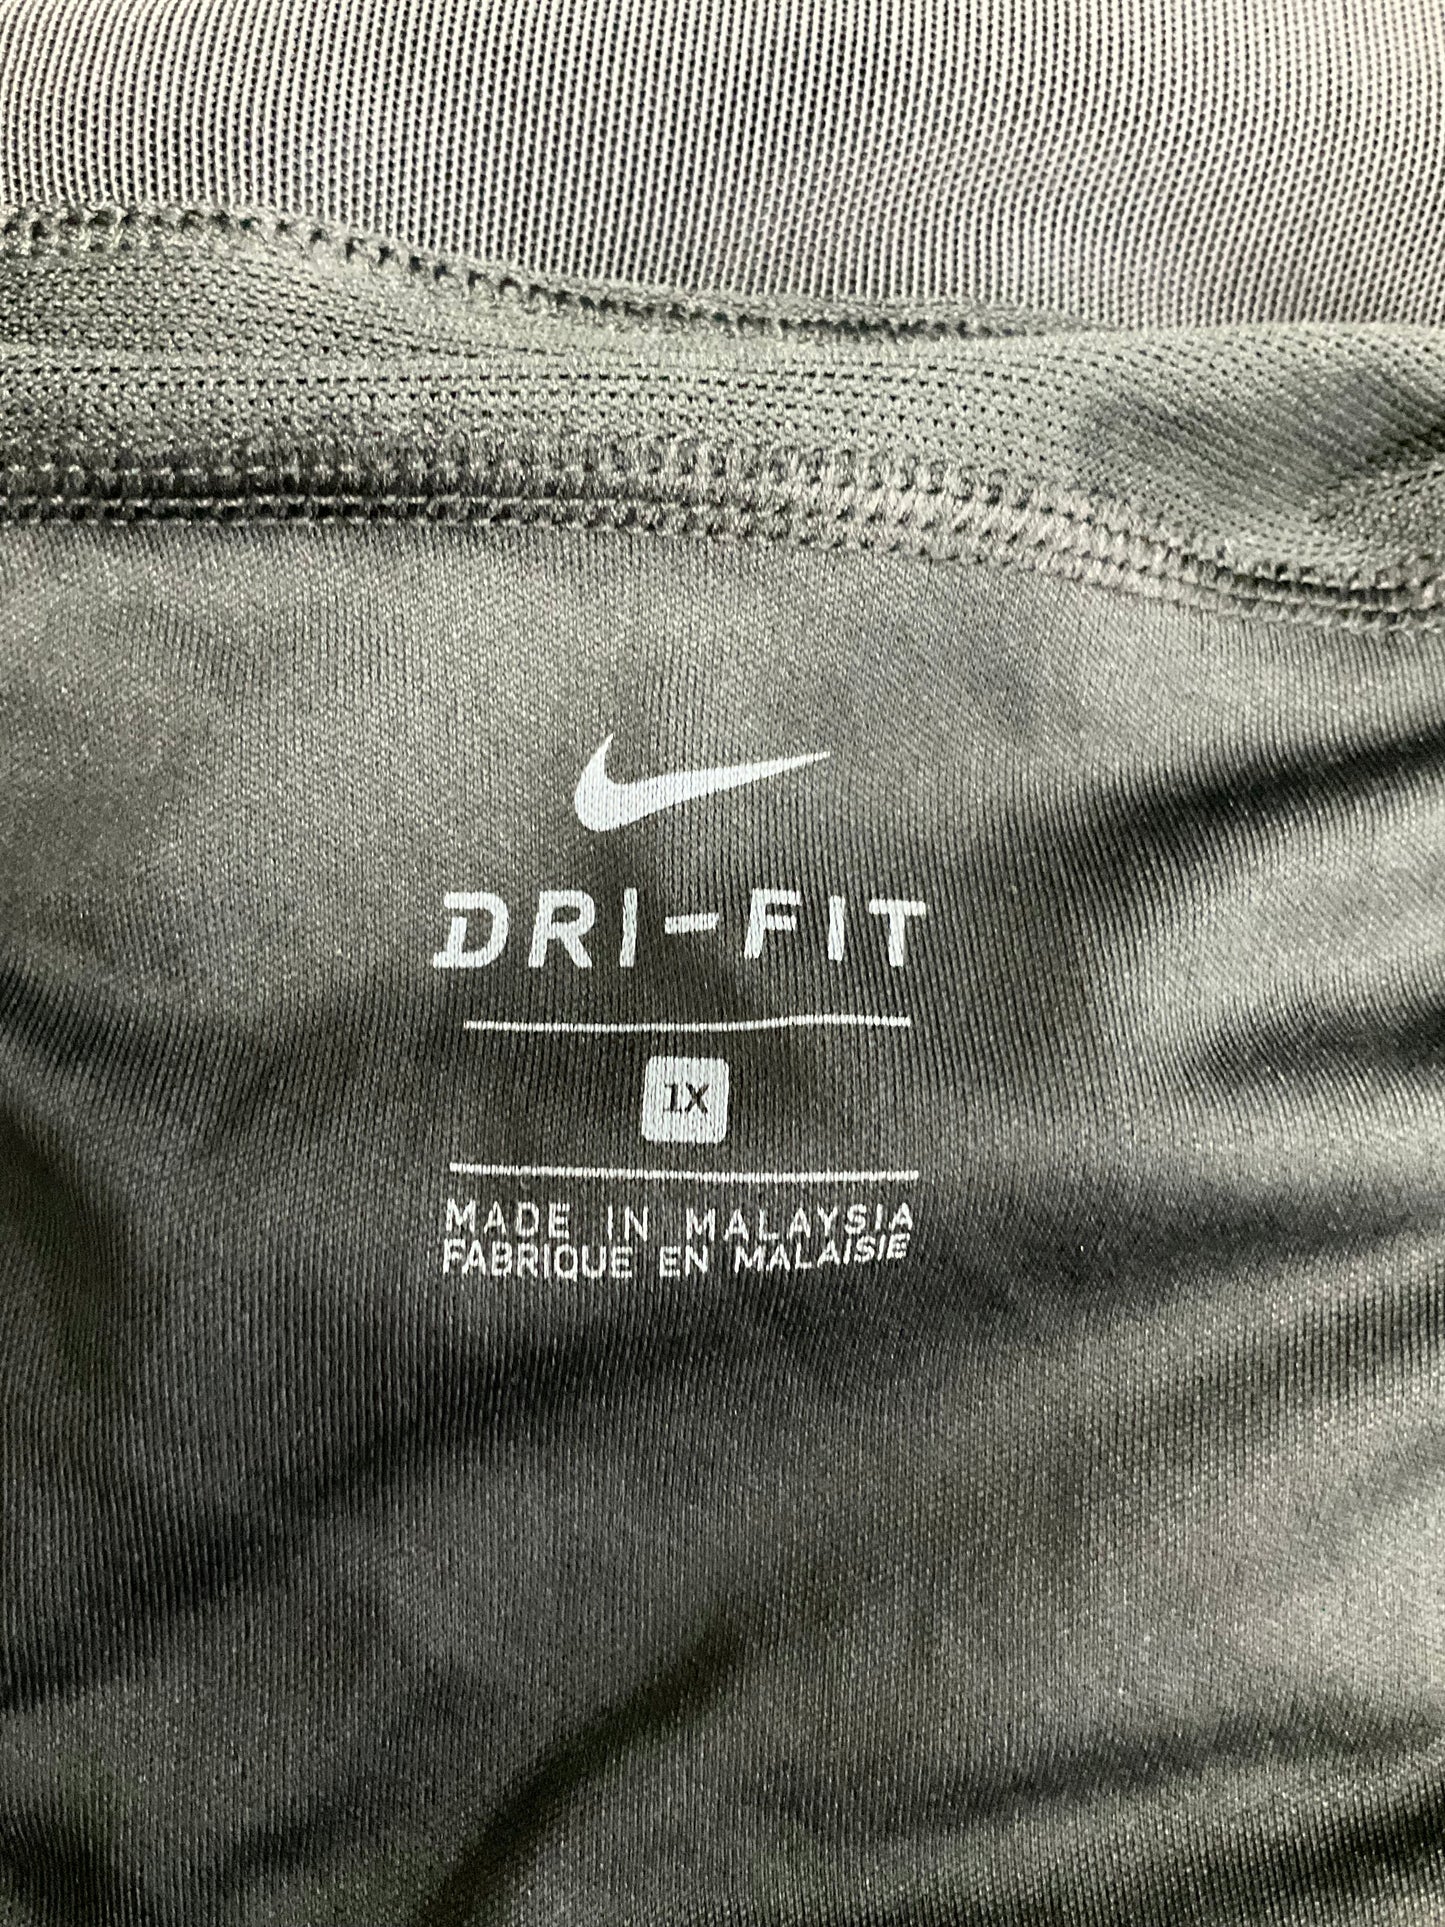 Black Athletic Shorts Nike Apparel, Size 1x